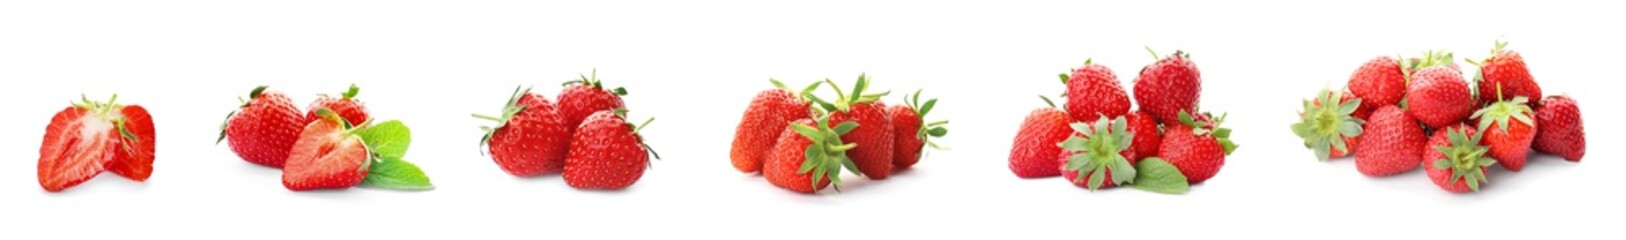 Set of ripe strawberries on white background. Banner design